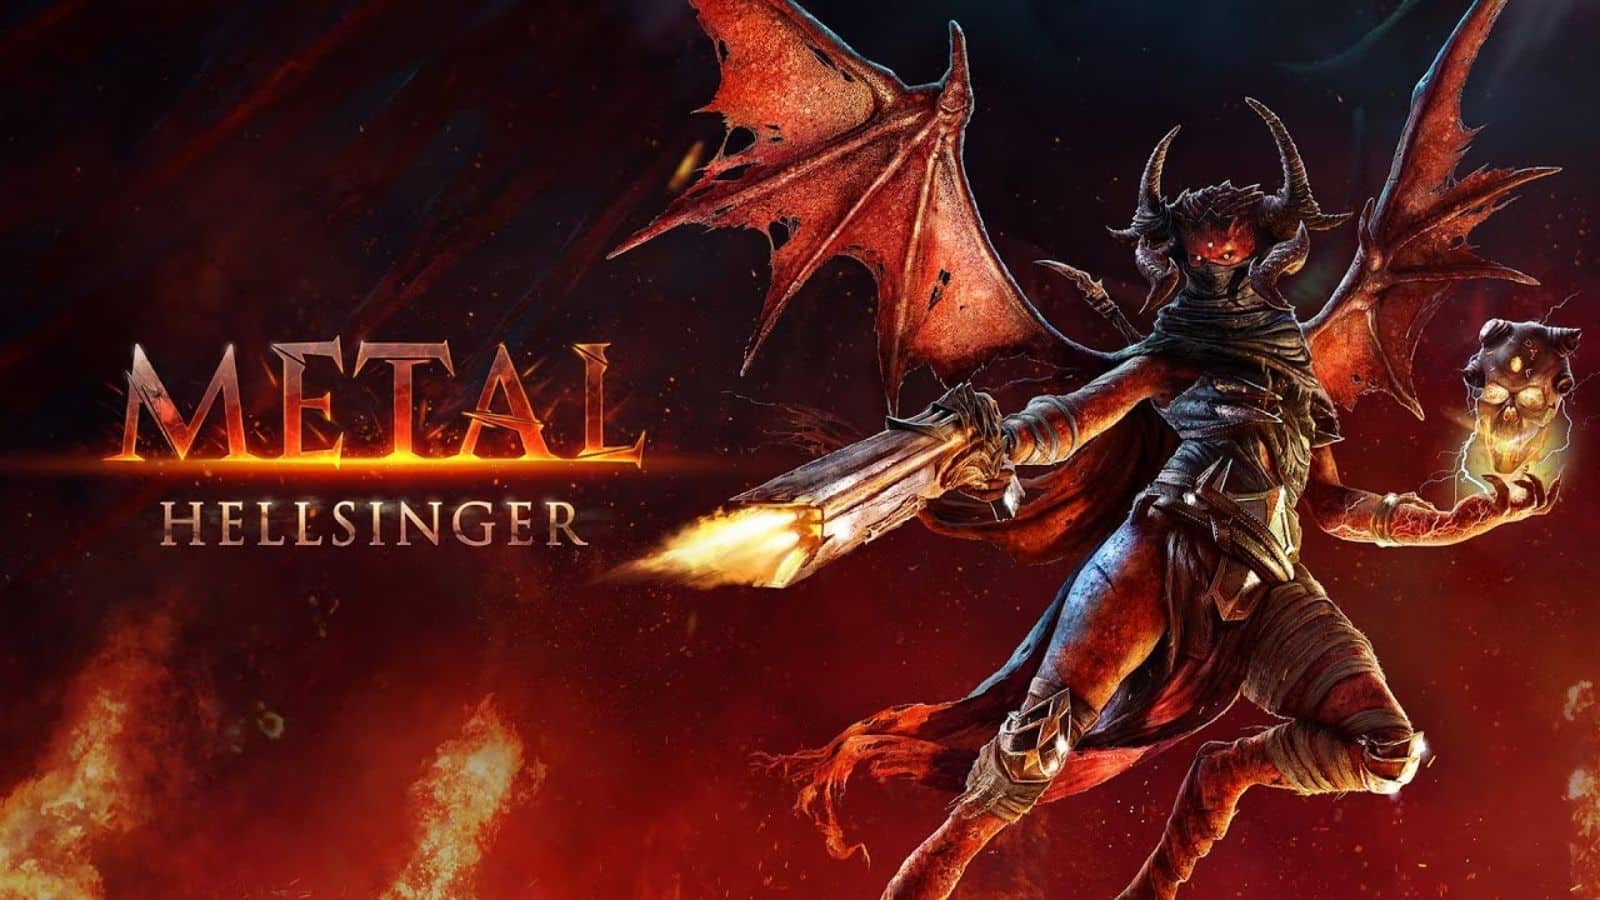 Metal Hellsinger 2'? Jinjer's Tatiana Shmayluk reveals her sequel lineup